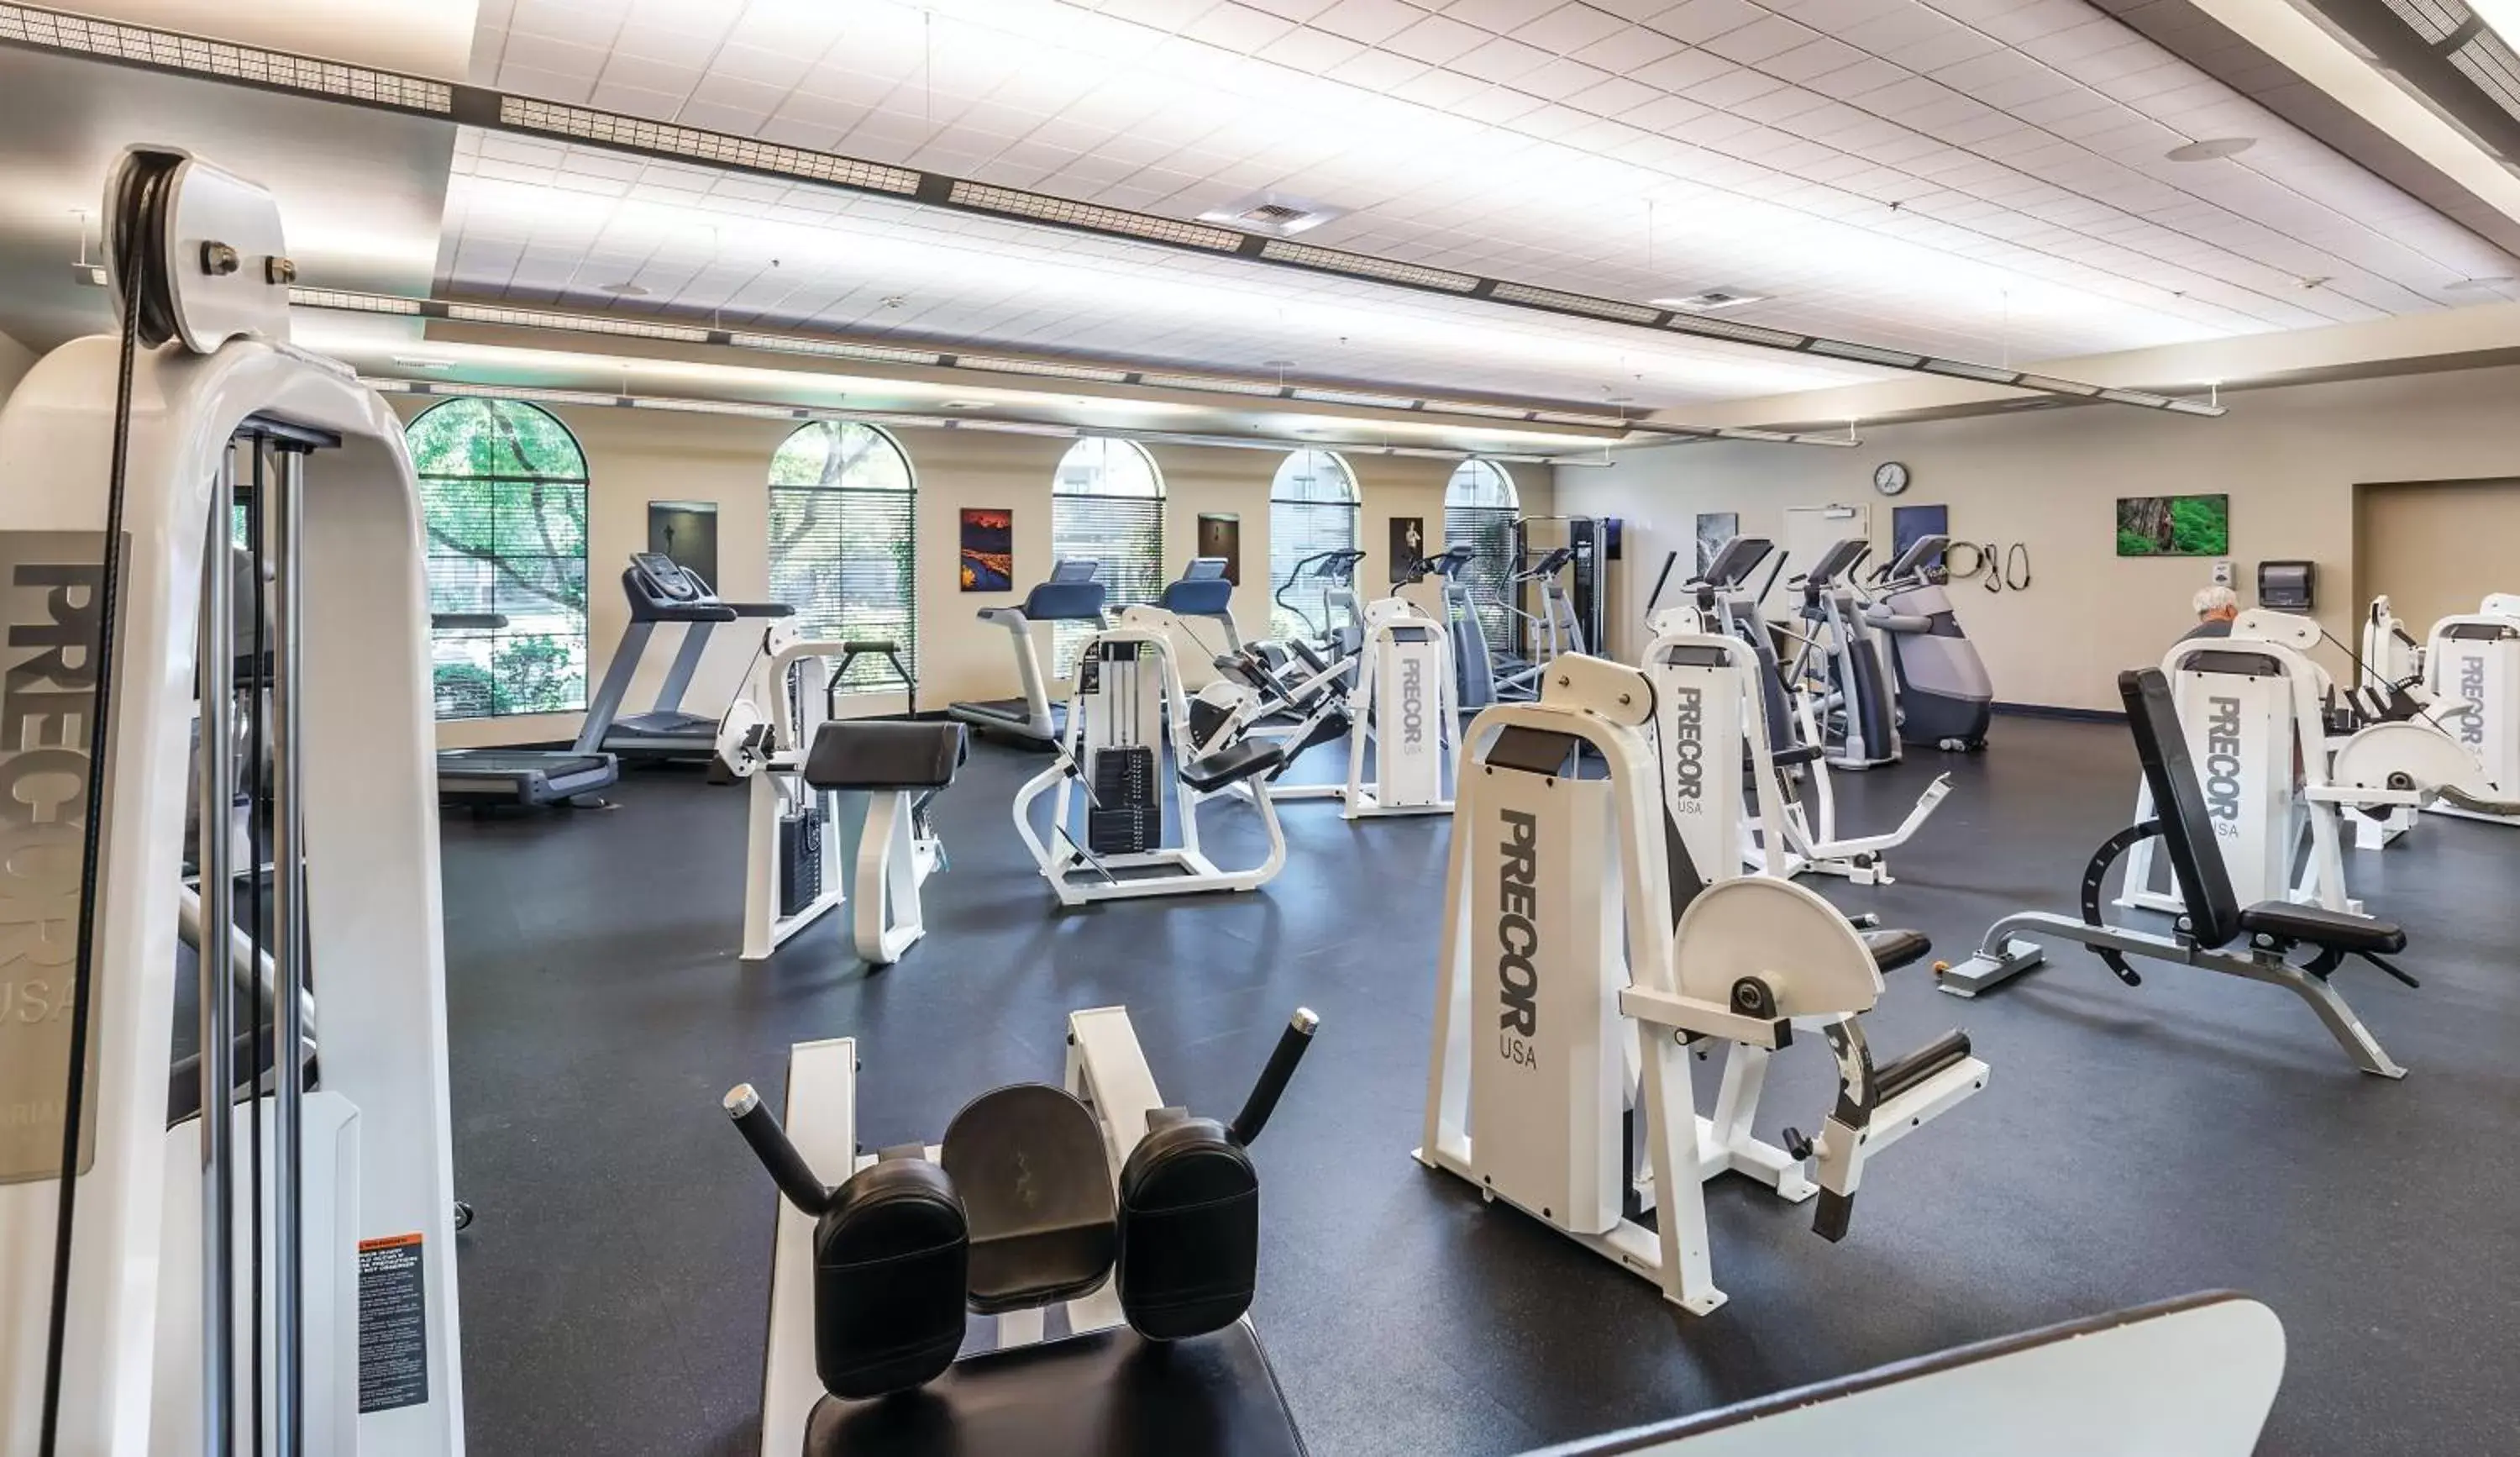 Fitness centre/facilities, Fitness Center/Facilities in WorldMark Indio